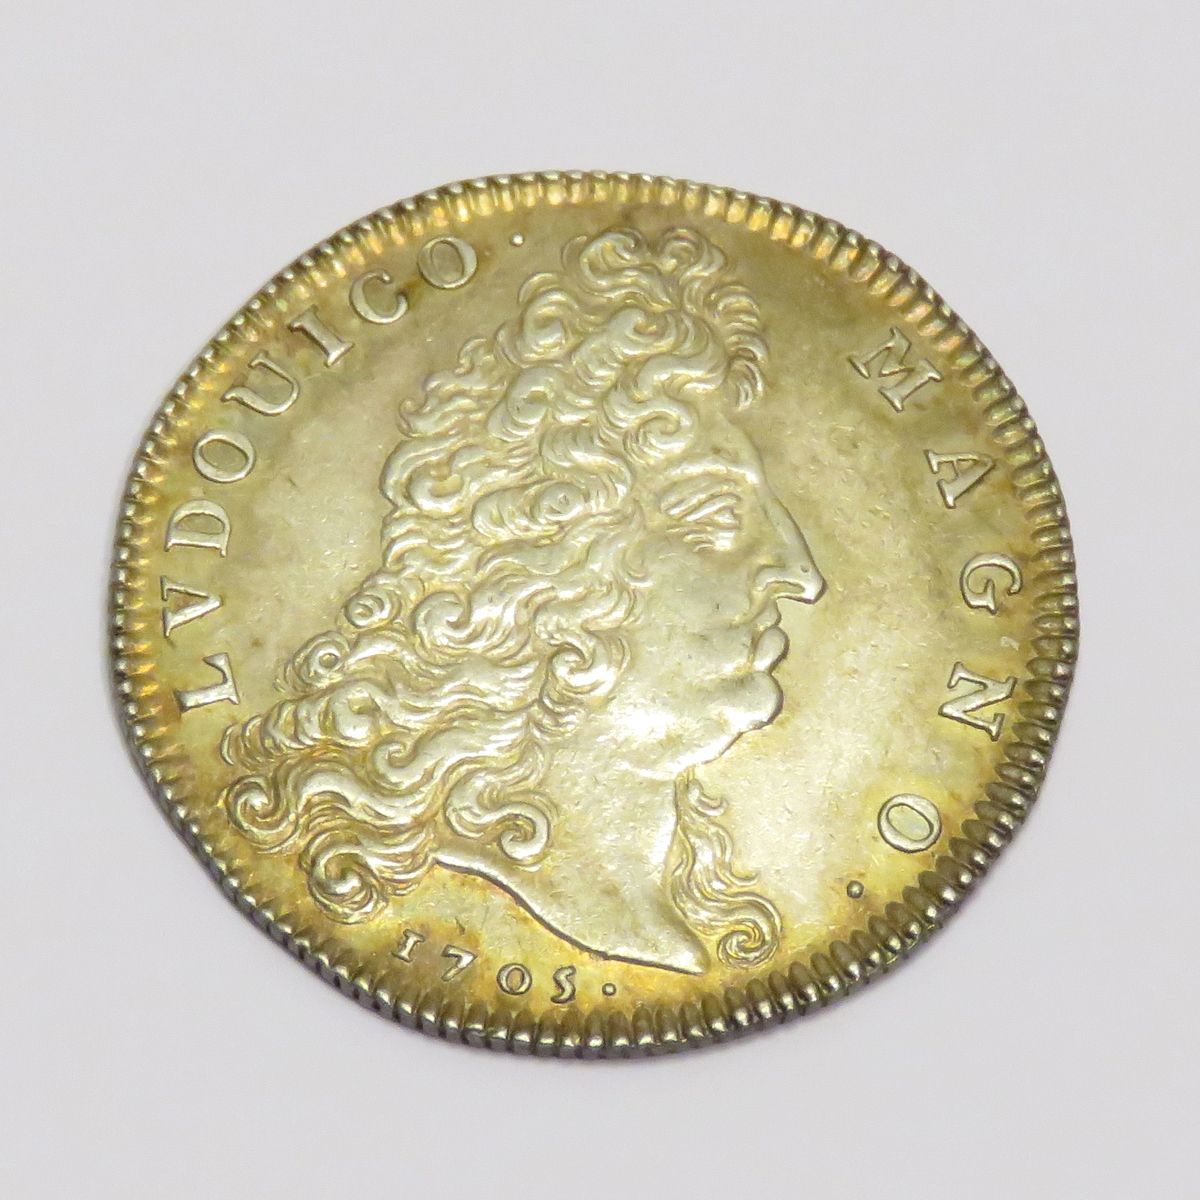 Null Ficha de plata "Louis XIV-Consiliis Assiduis" fechada en 1705. Peso : 6g25.&hellip;